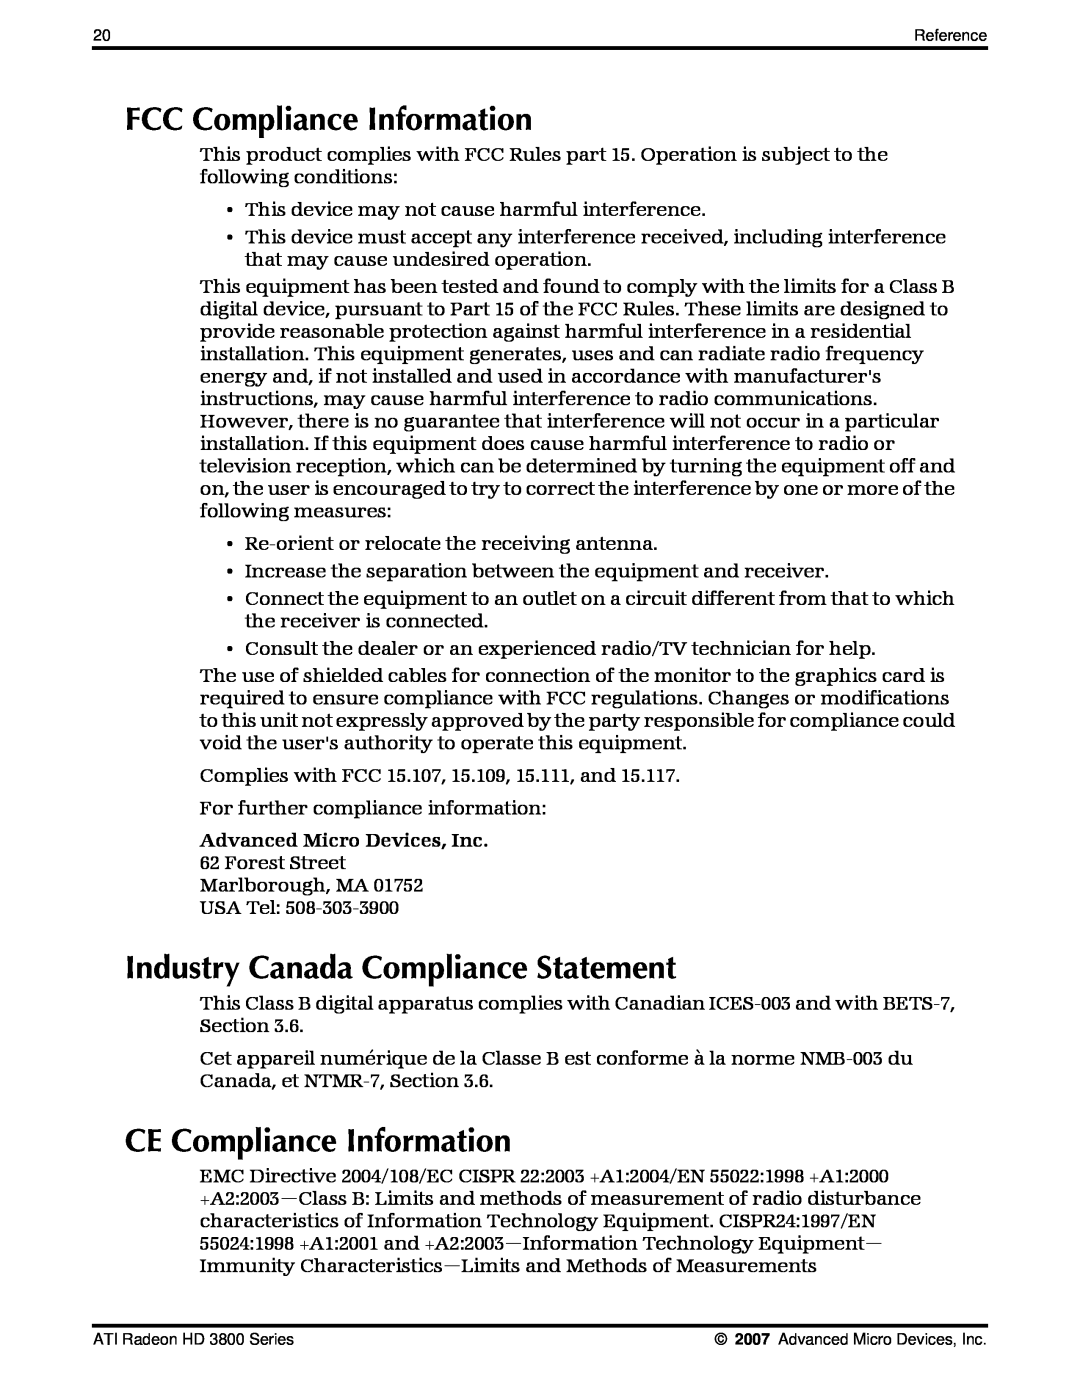 AMD HD 3800 manual FCC Compliance Information, Industry Canada Compliance Statement, CE Compliance Information 